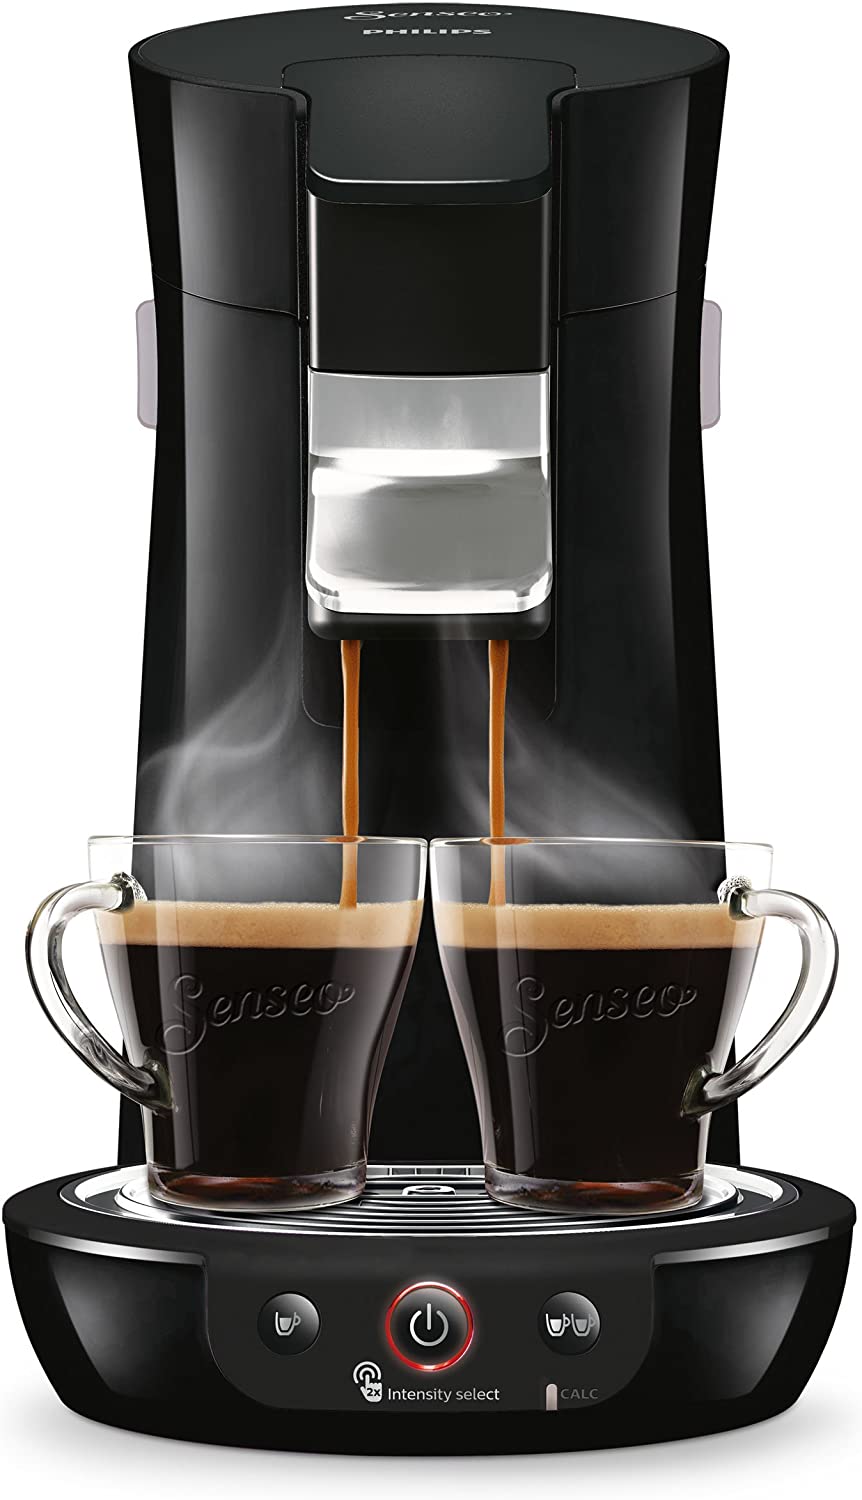 Philips Senseo Viva Cafe Coffee Pod Machine